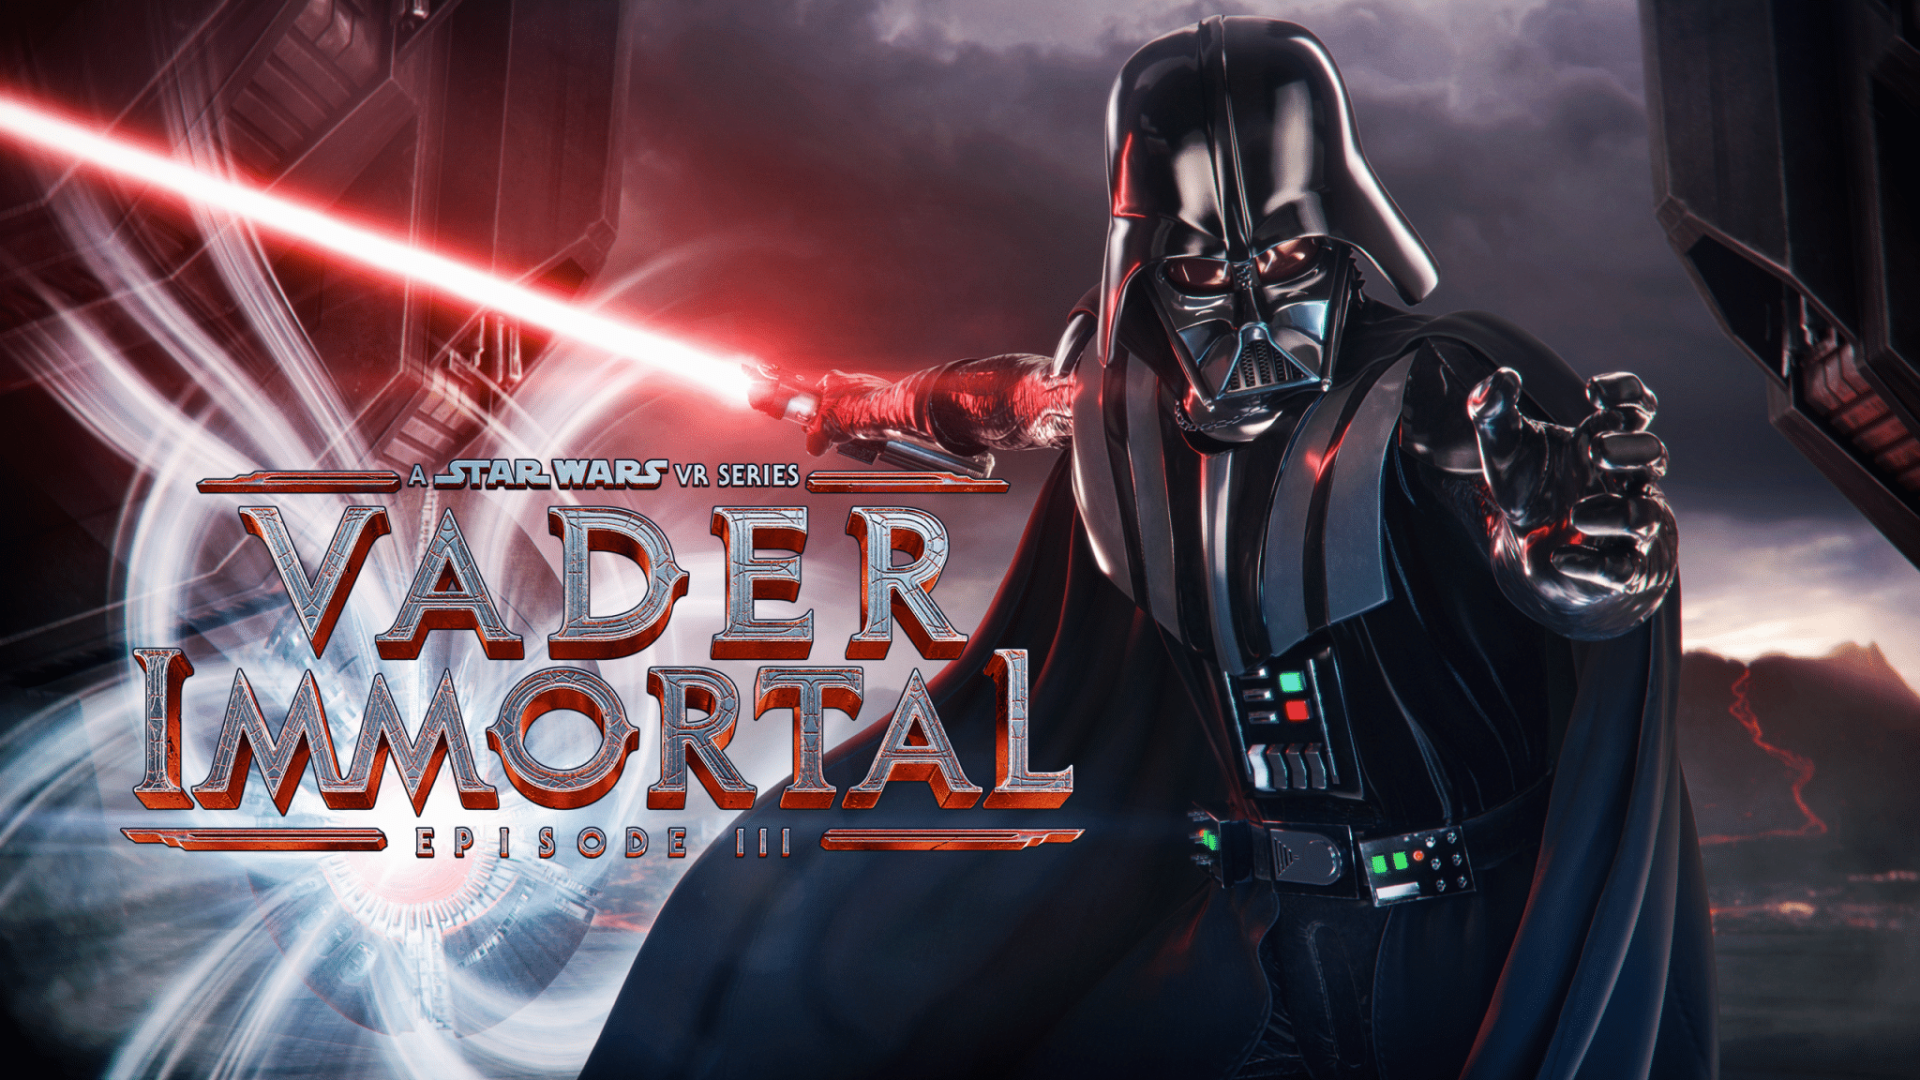 Vader Immortal: A Star Wars VR Series เตรียมเปิดให้เล่นบน PSVR ในช่วงฤดูร้อนนี้